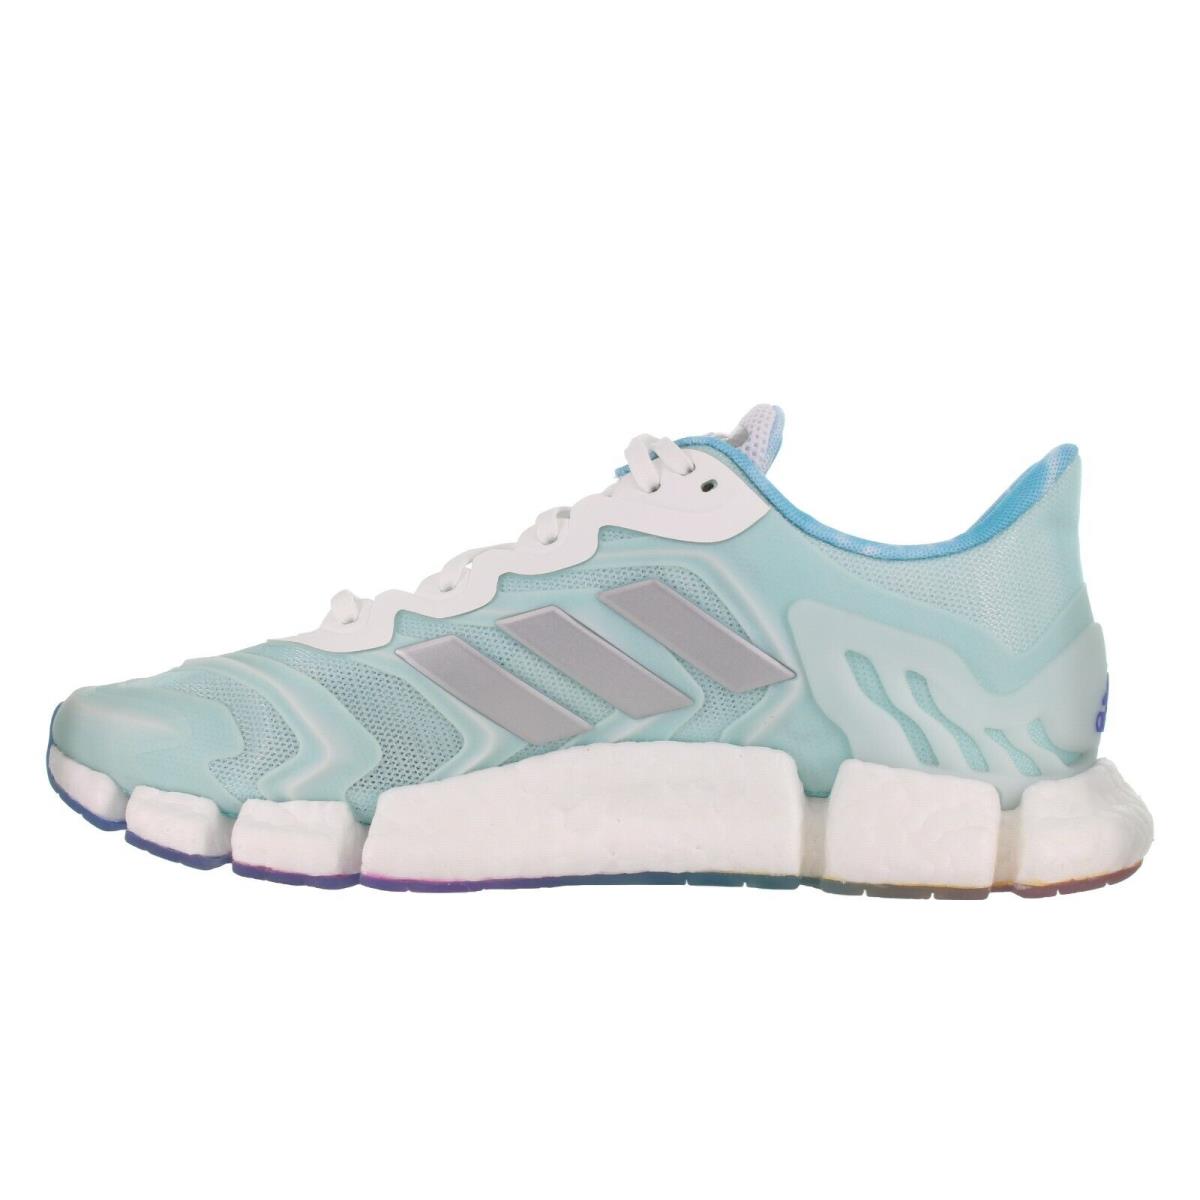 Adidas Men`s Climacool Vento White/aqua Training Shoes Multiple Size